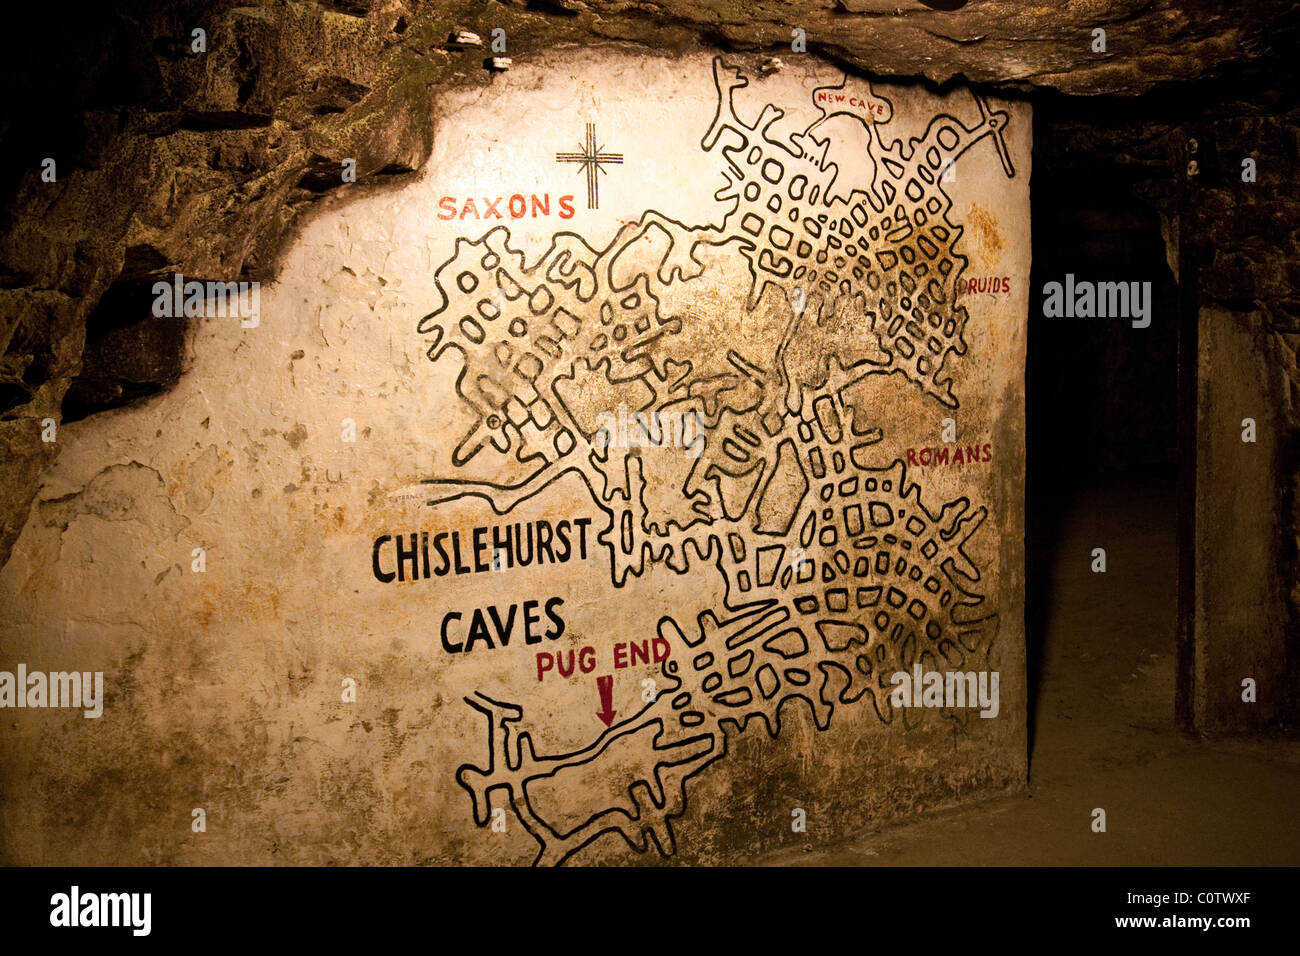 The map of the caves at the entrance, Chislehurst Caves, Chislehurst